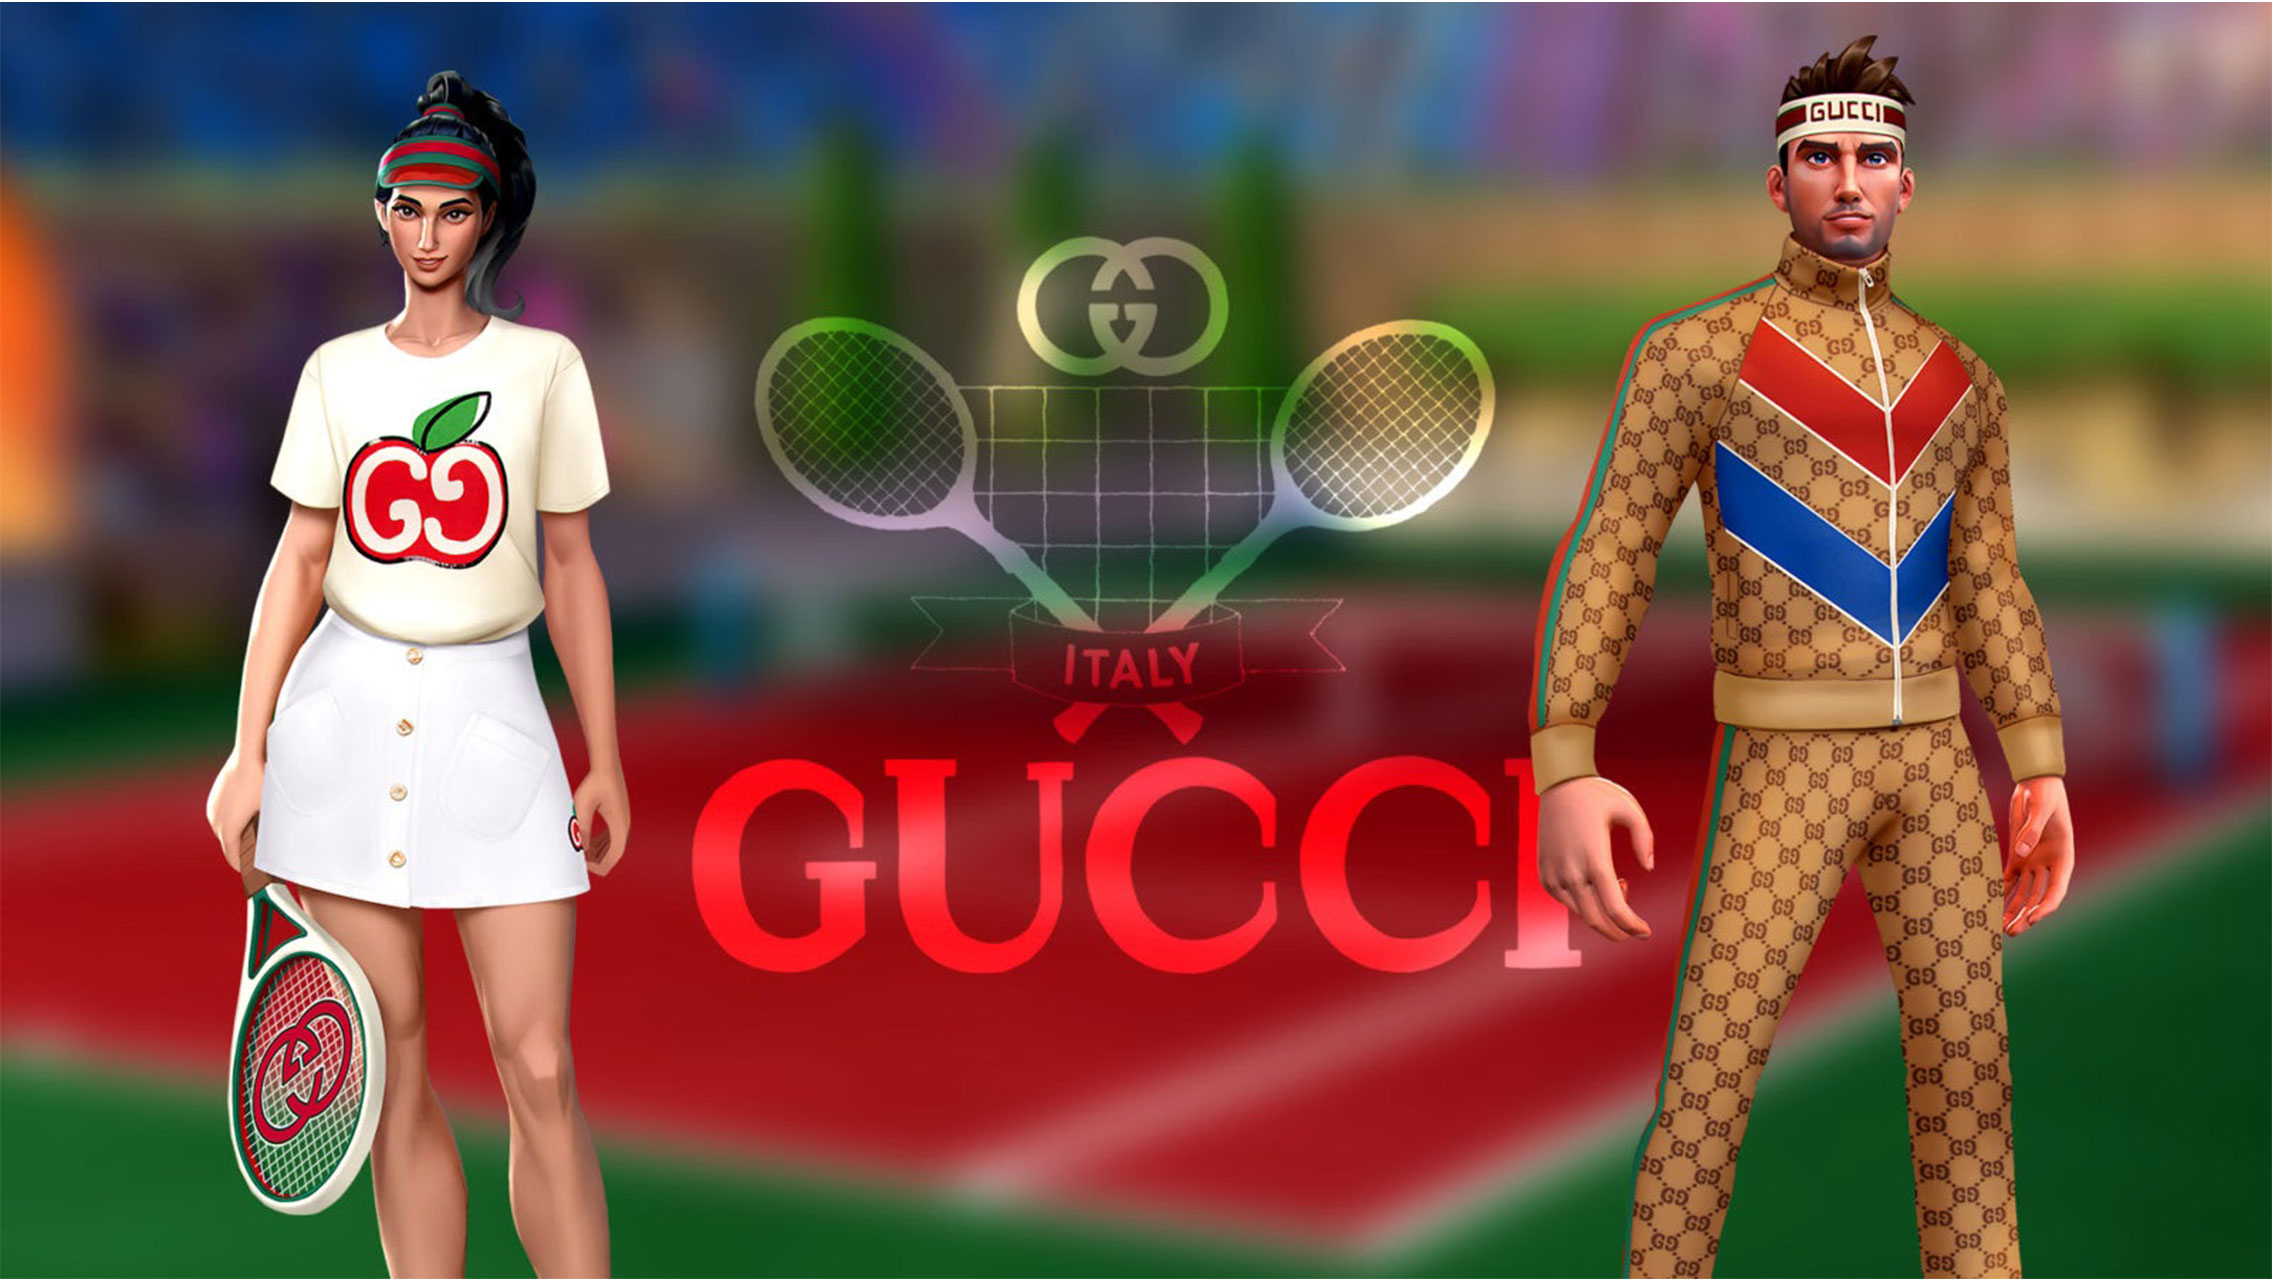 Gucci Umumkan Kolaborasi dengan Tennis Clash